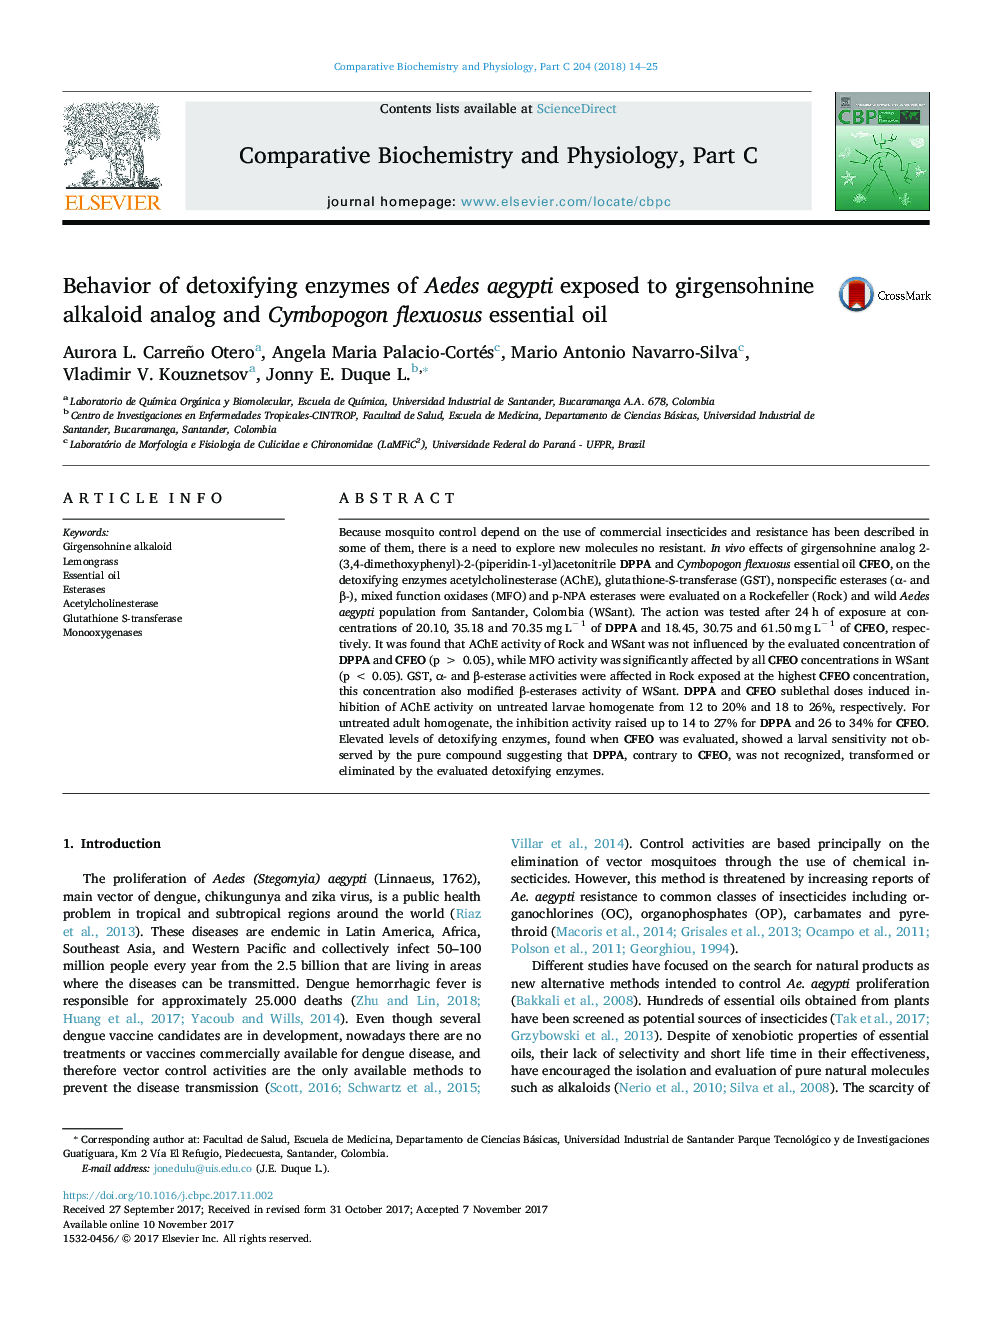 Behavior of detoxifying enzymes of Aedes aegypti exposed to girgensohnine alkaloid analog and Cymbopogon flexuosus essential oil